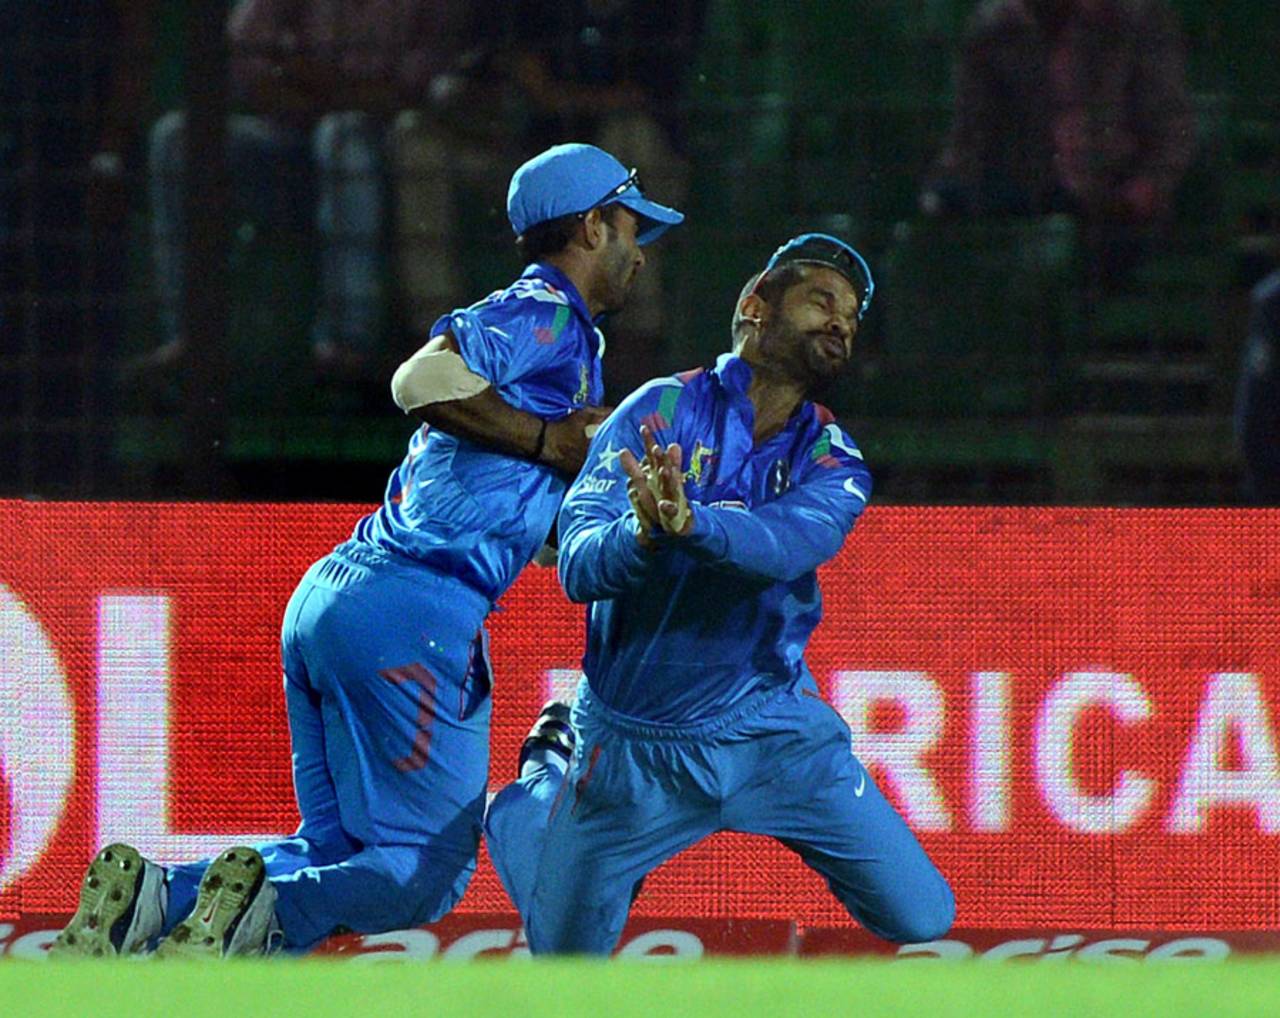 Ajinkya Rahane and Shikhar Dhawan dropped the ball after they both went for a catch, India v Sri Lanka, Asia Cup, Fatullah, February 28, 2014